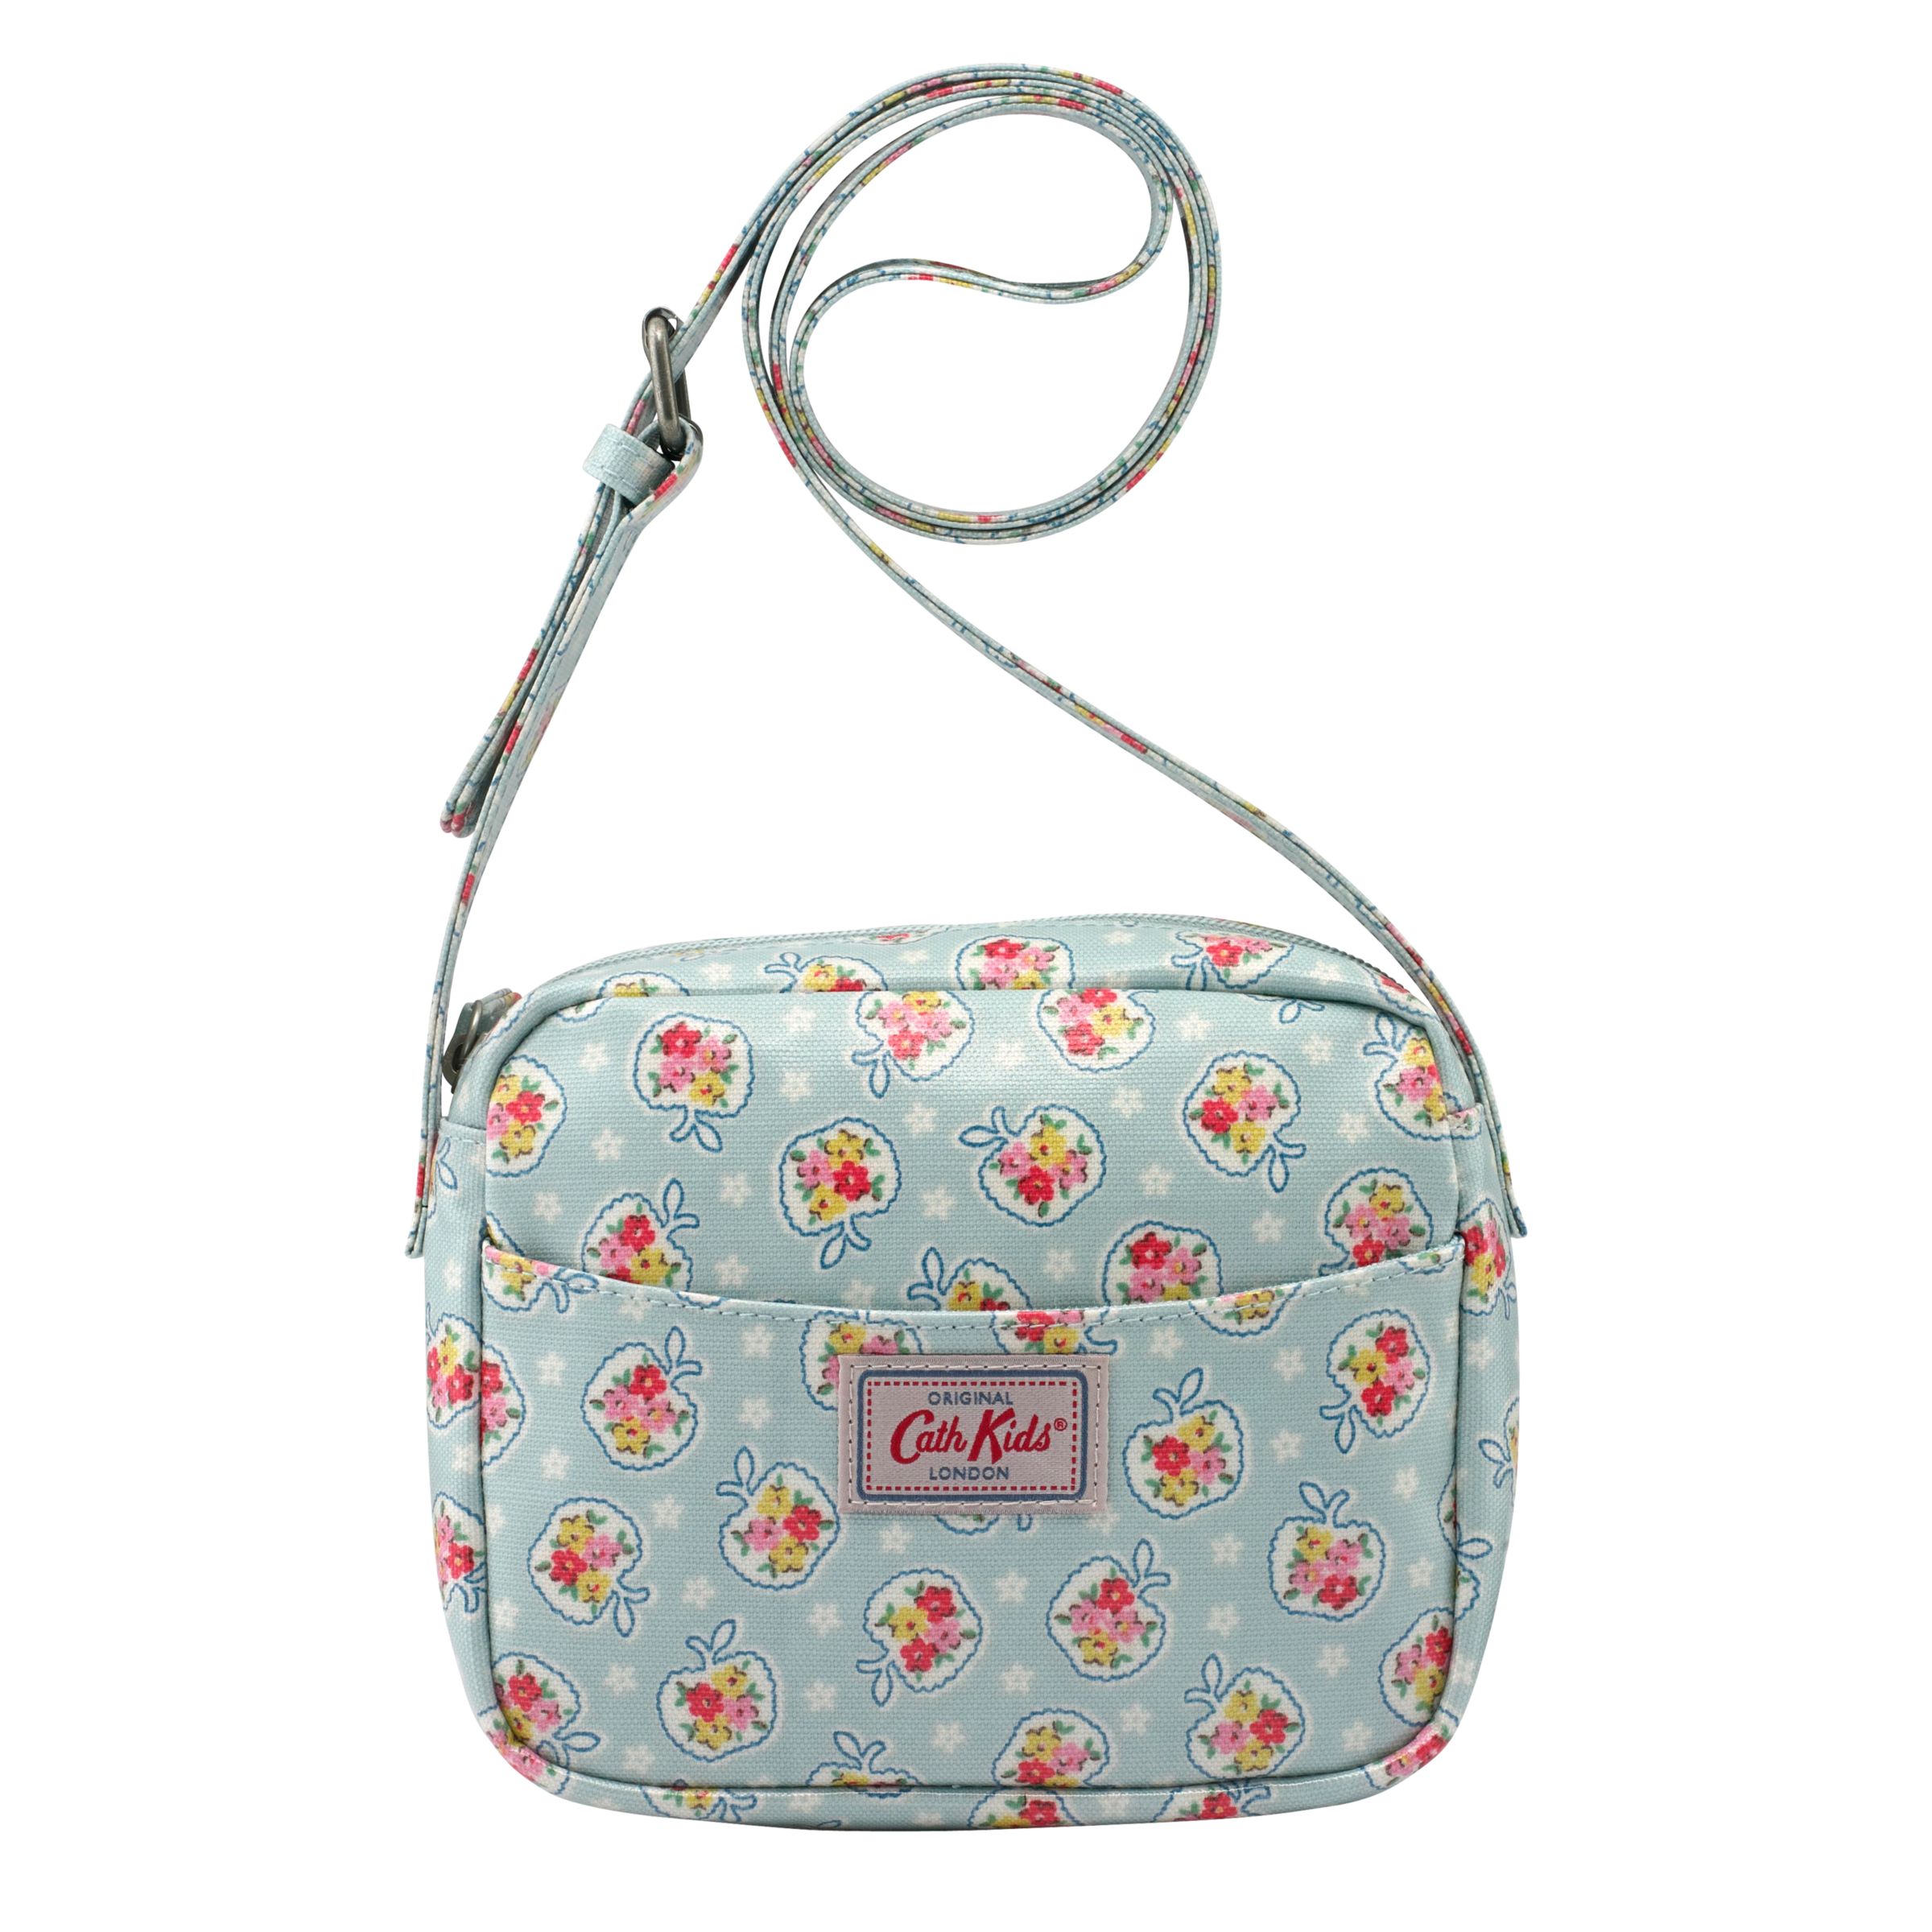 cath kidston children's handbag